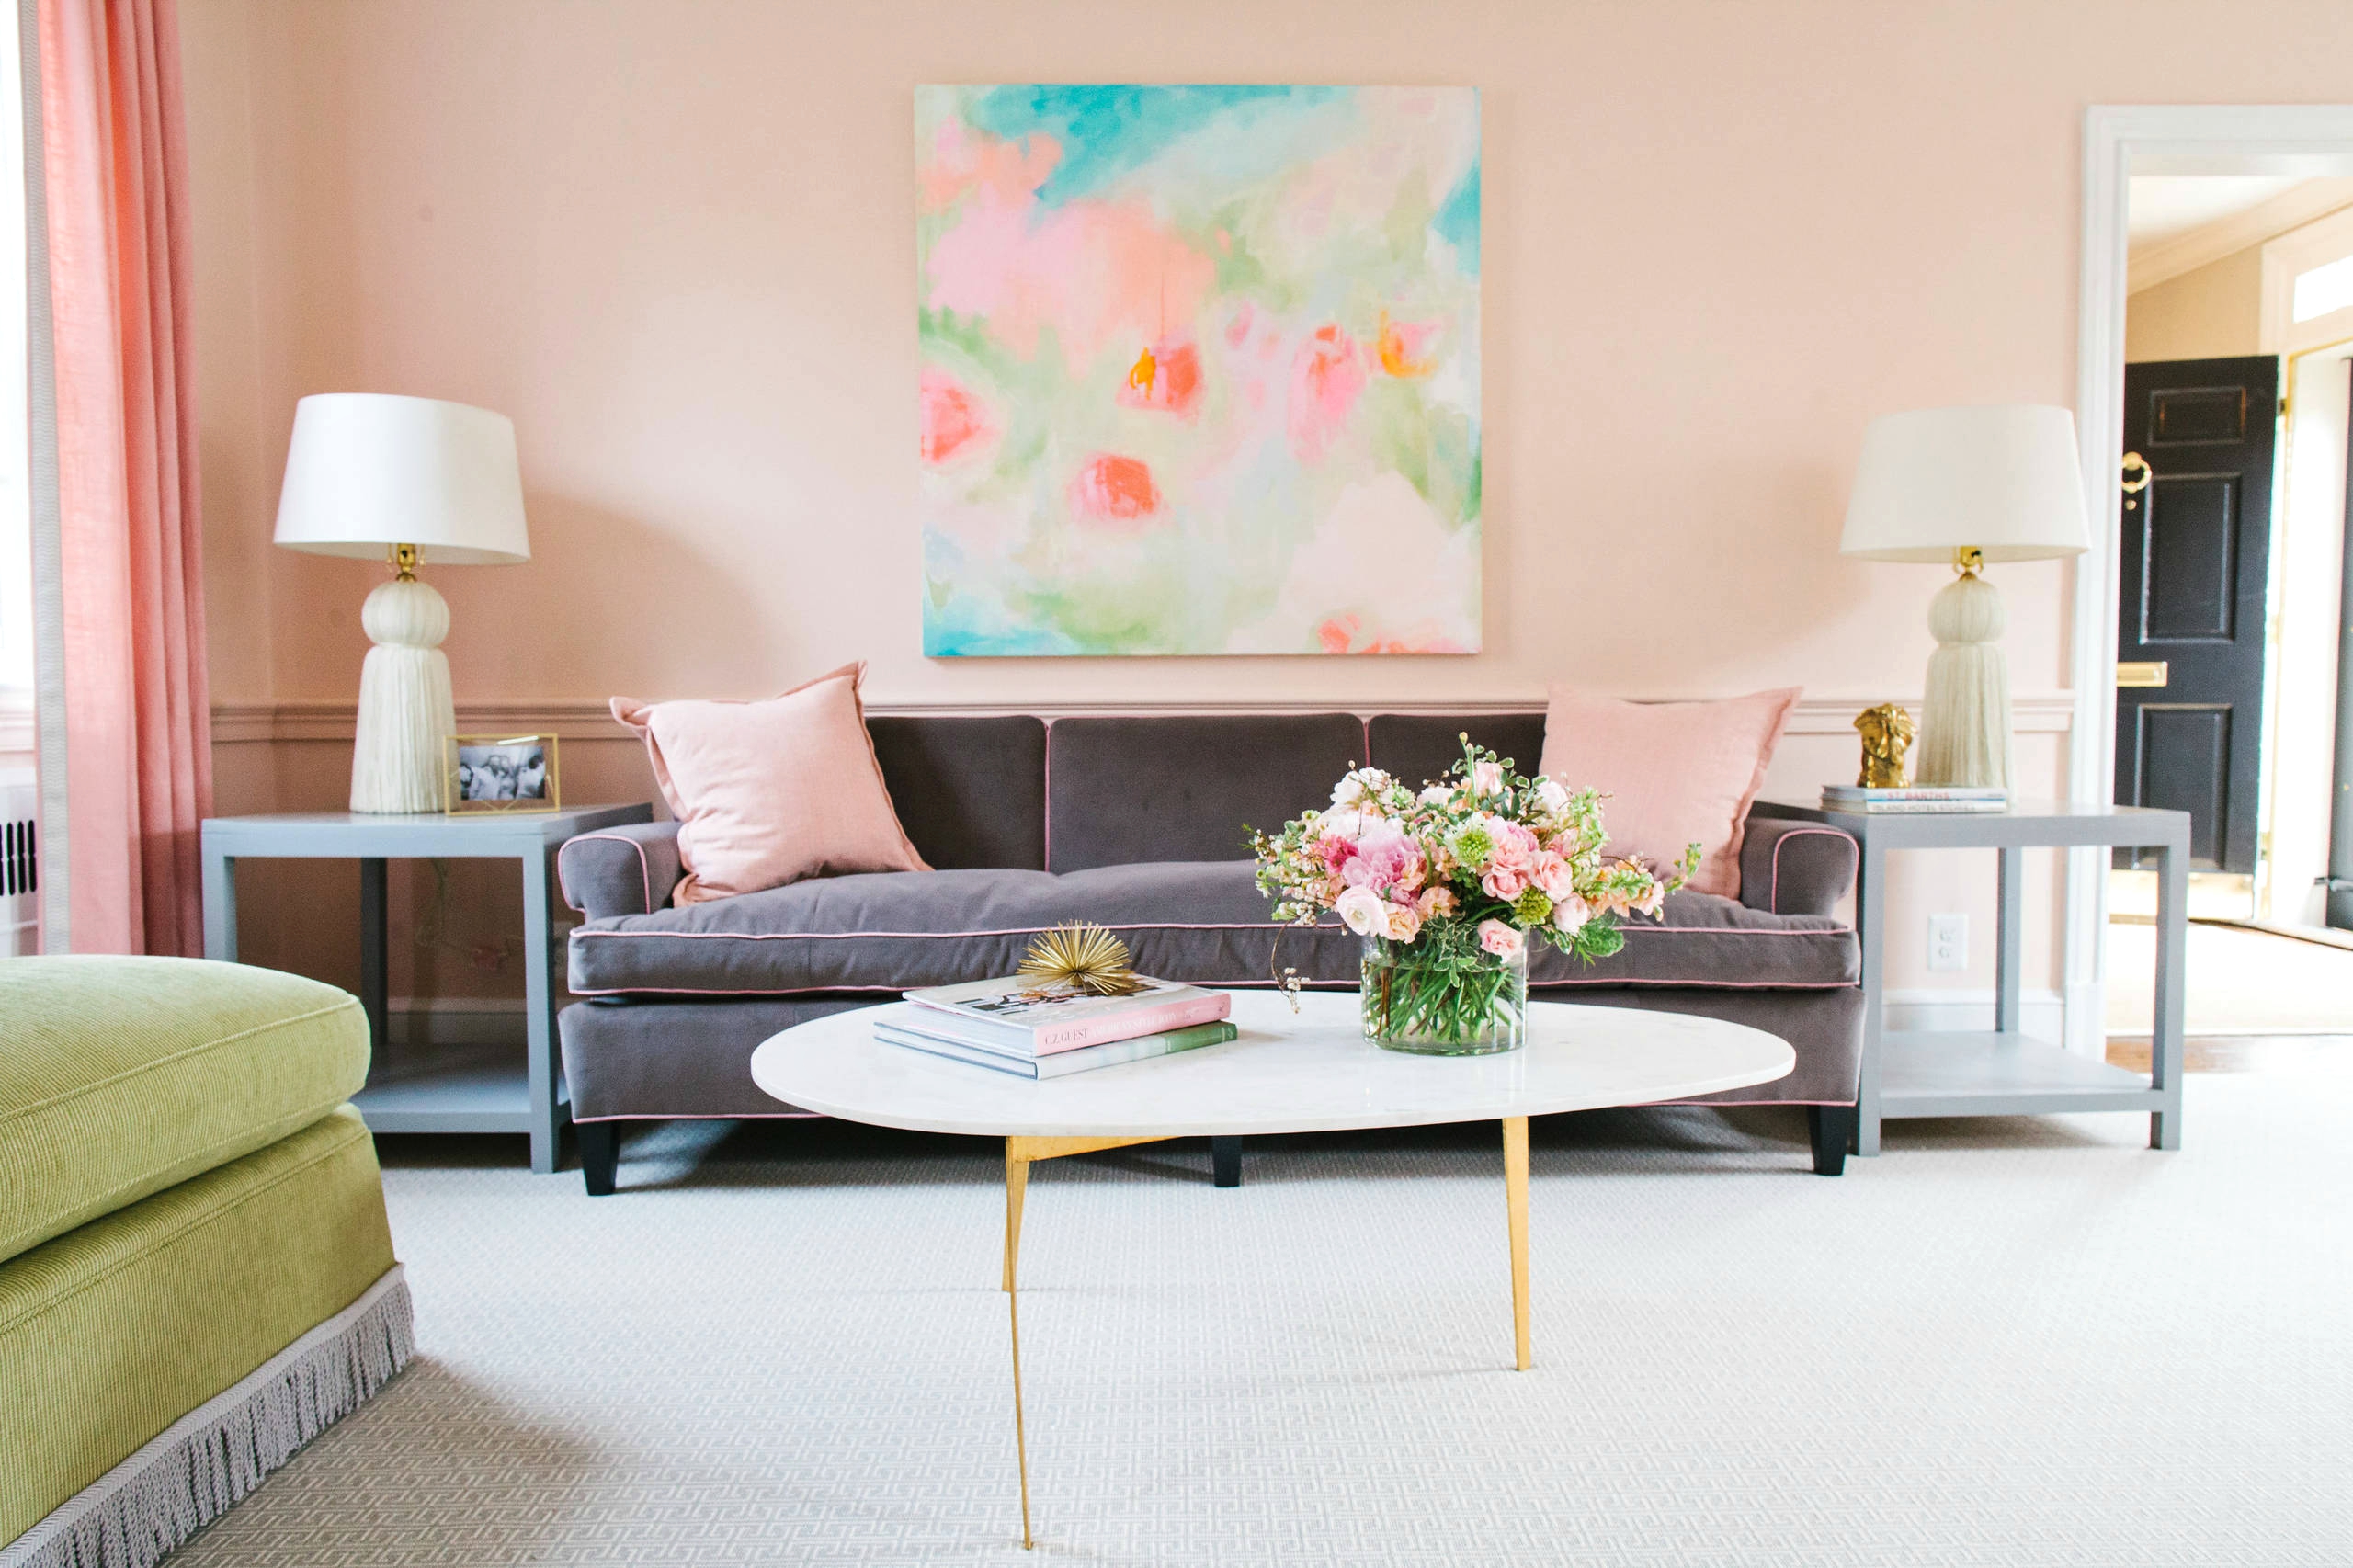 Hiasan ruang tamu pink pastel lembut dengan grey purple set sofa